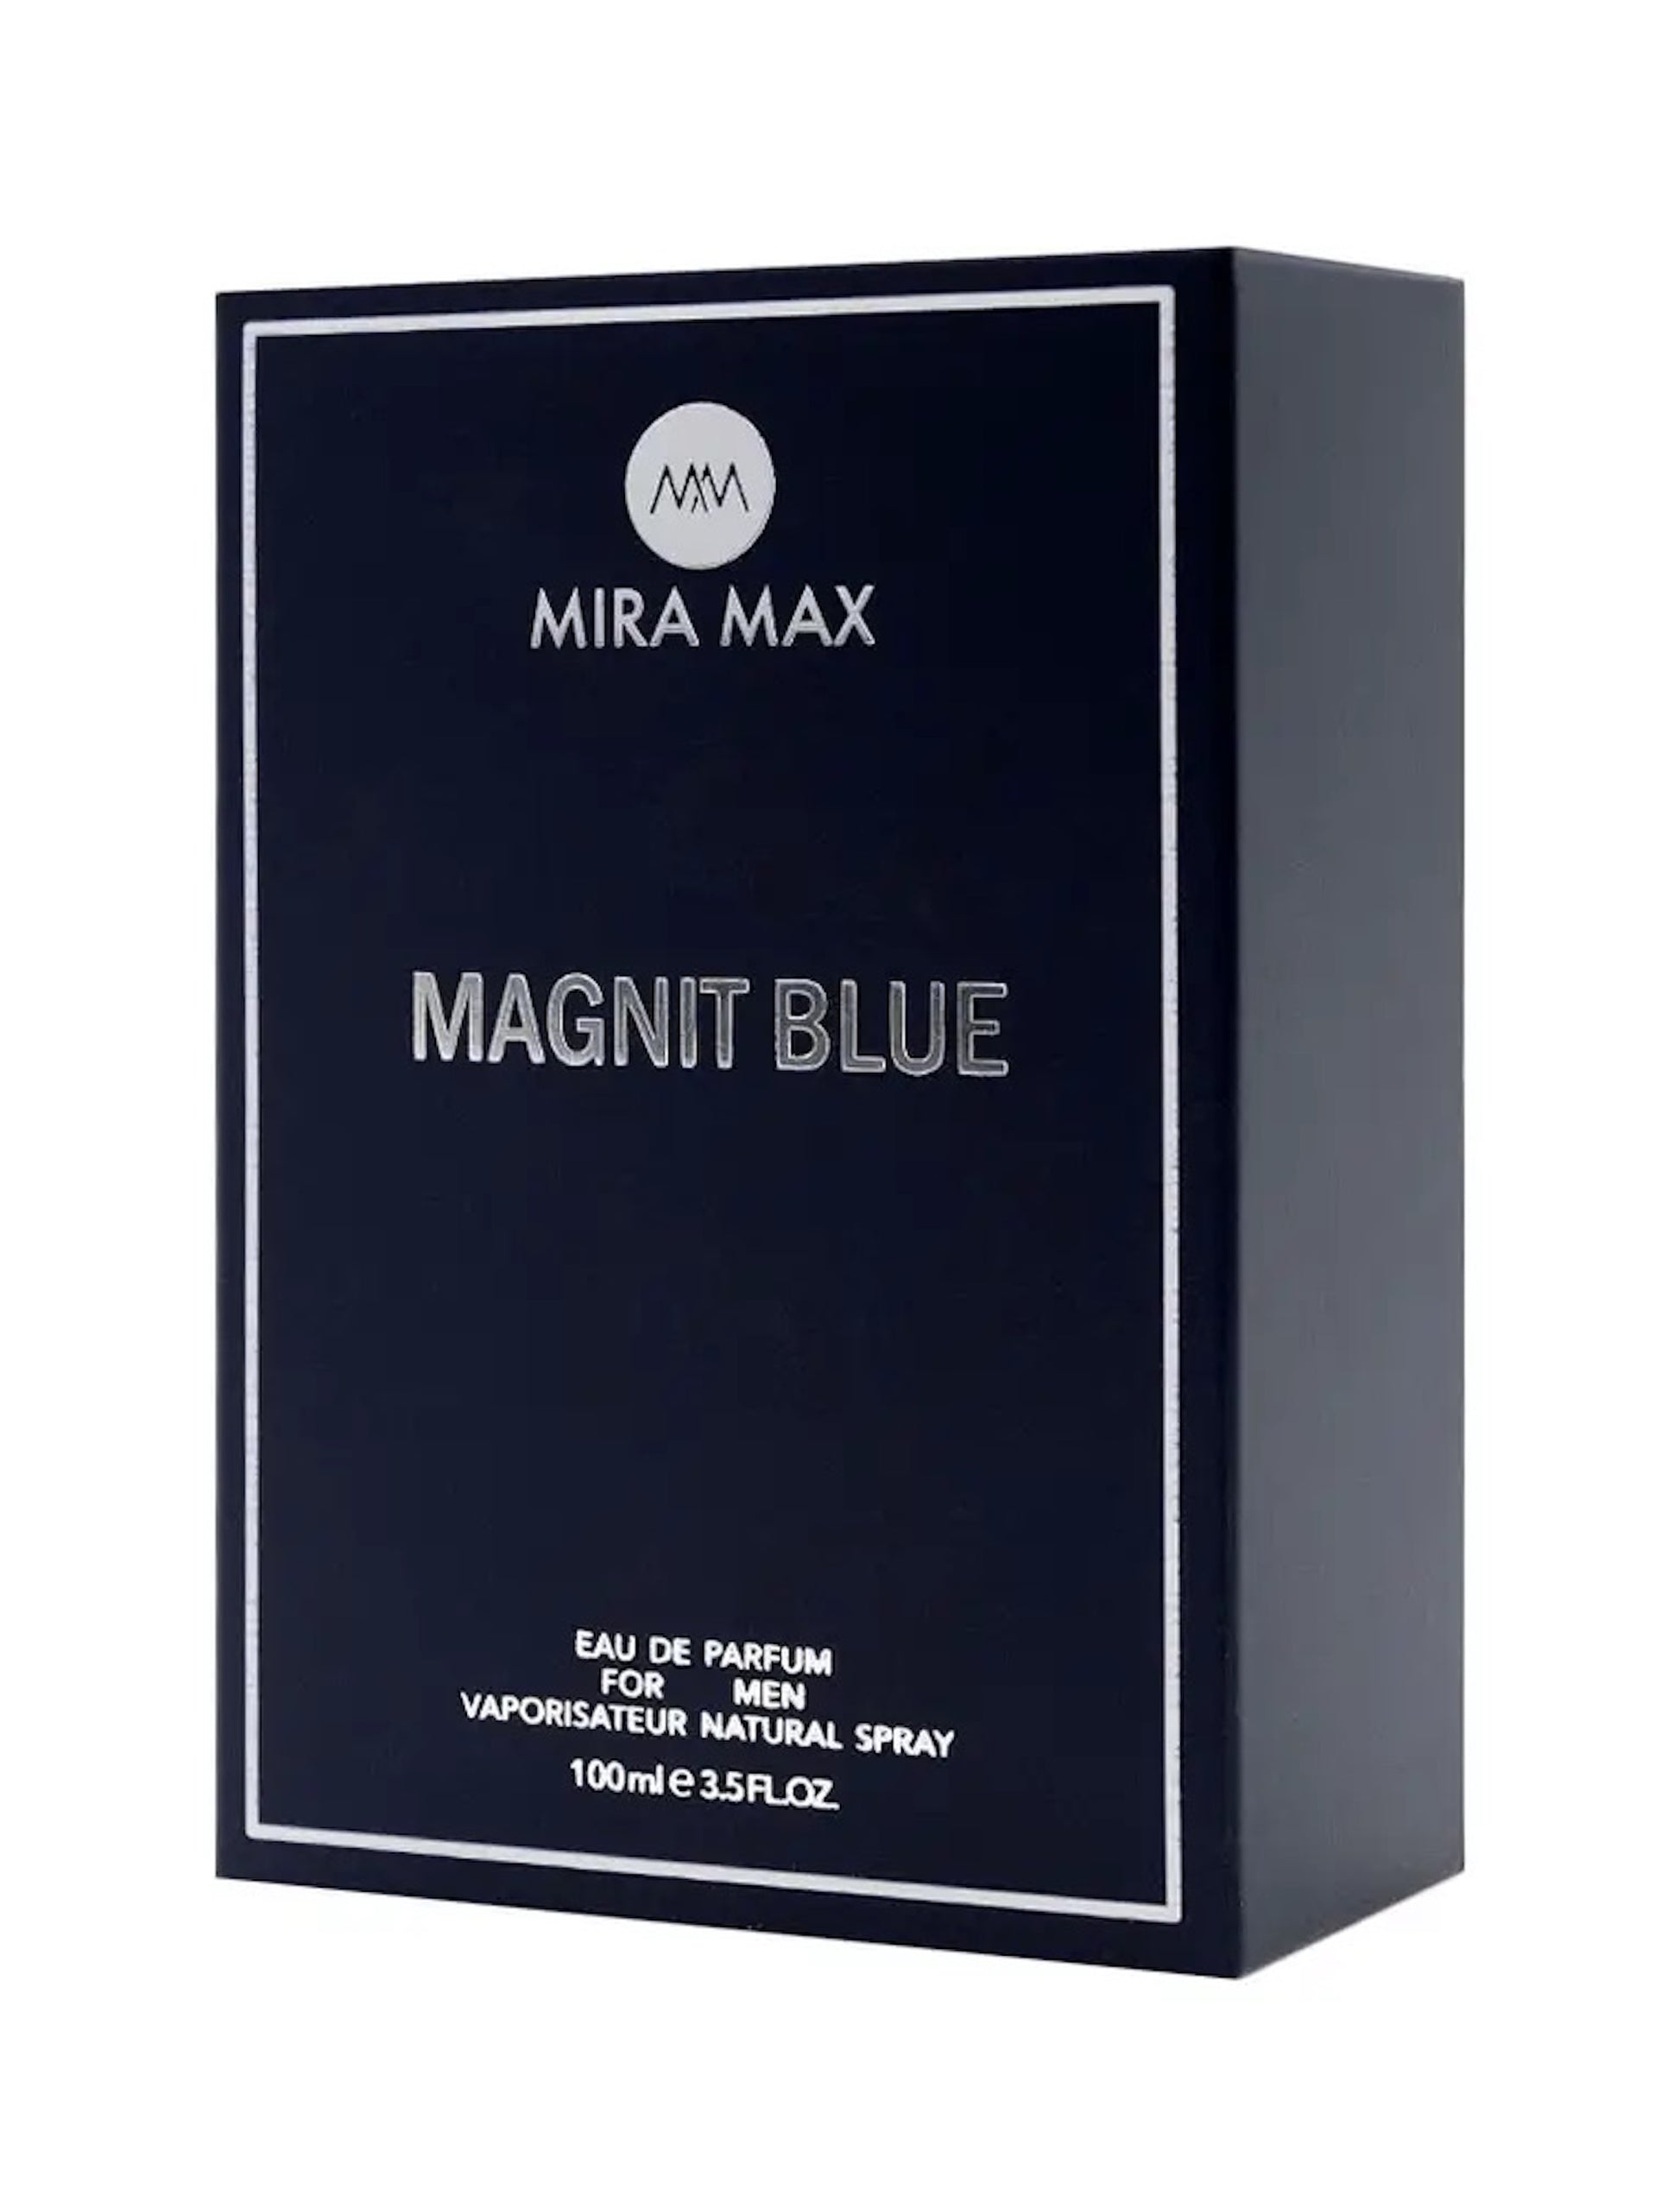 BLEU de CHANEL Blue for Men 3.4oz / 100ml EAU DE PARFUM Spray NEW OPEN BOX